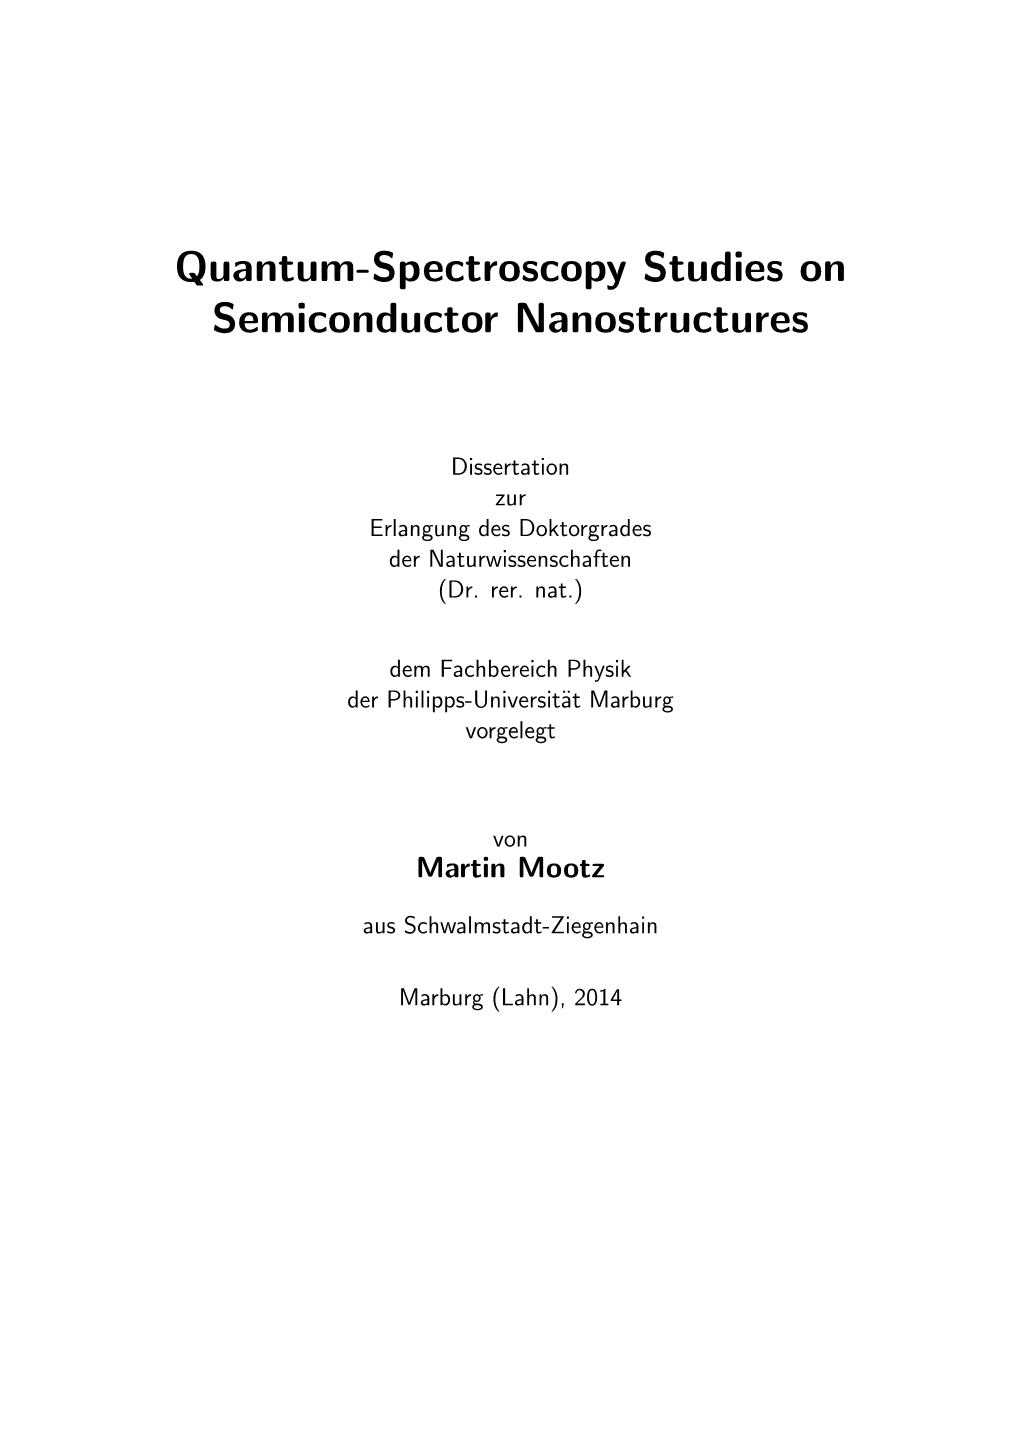 Quantum-Spectroscopy Studies on Semiconductor Nanostructures